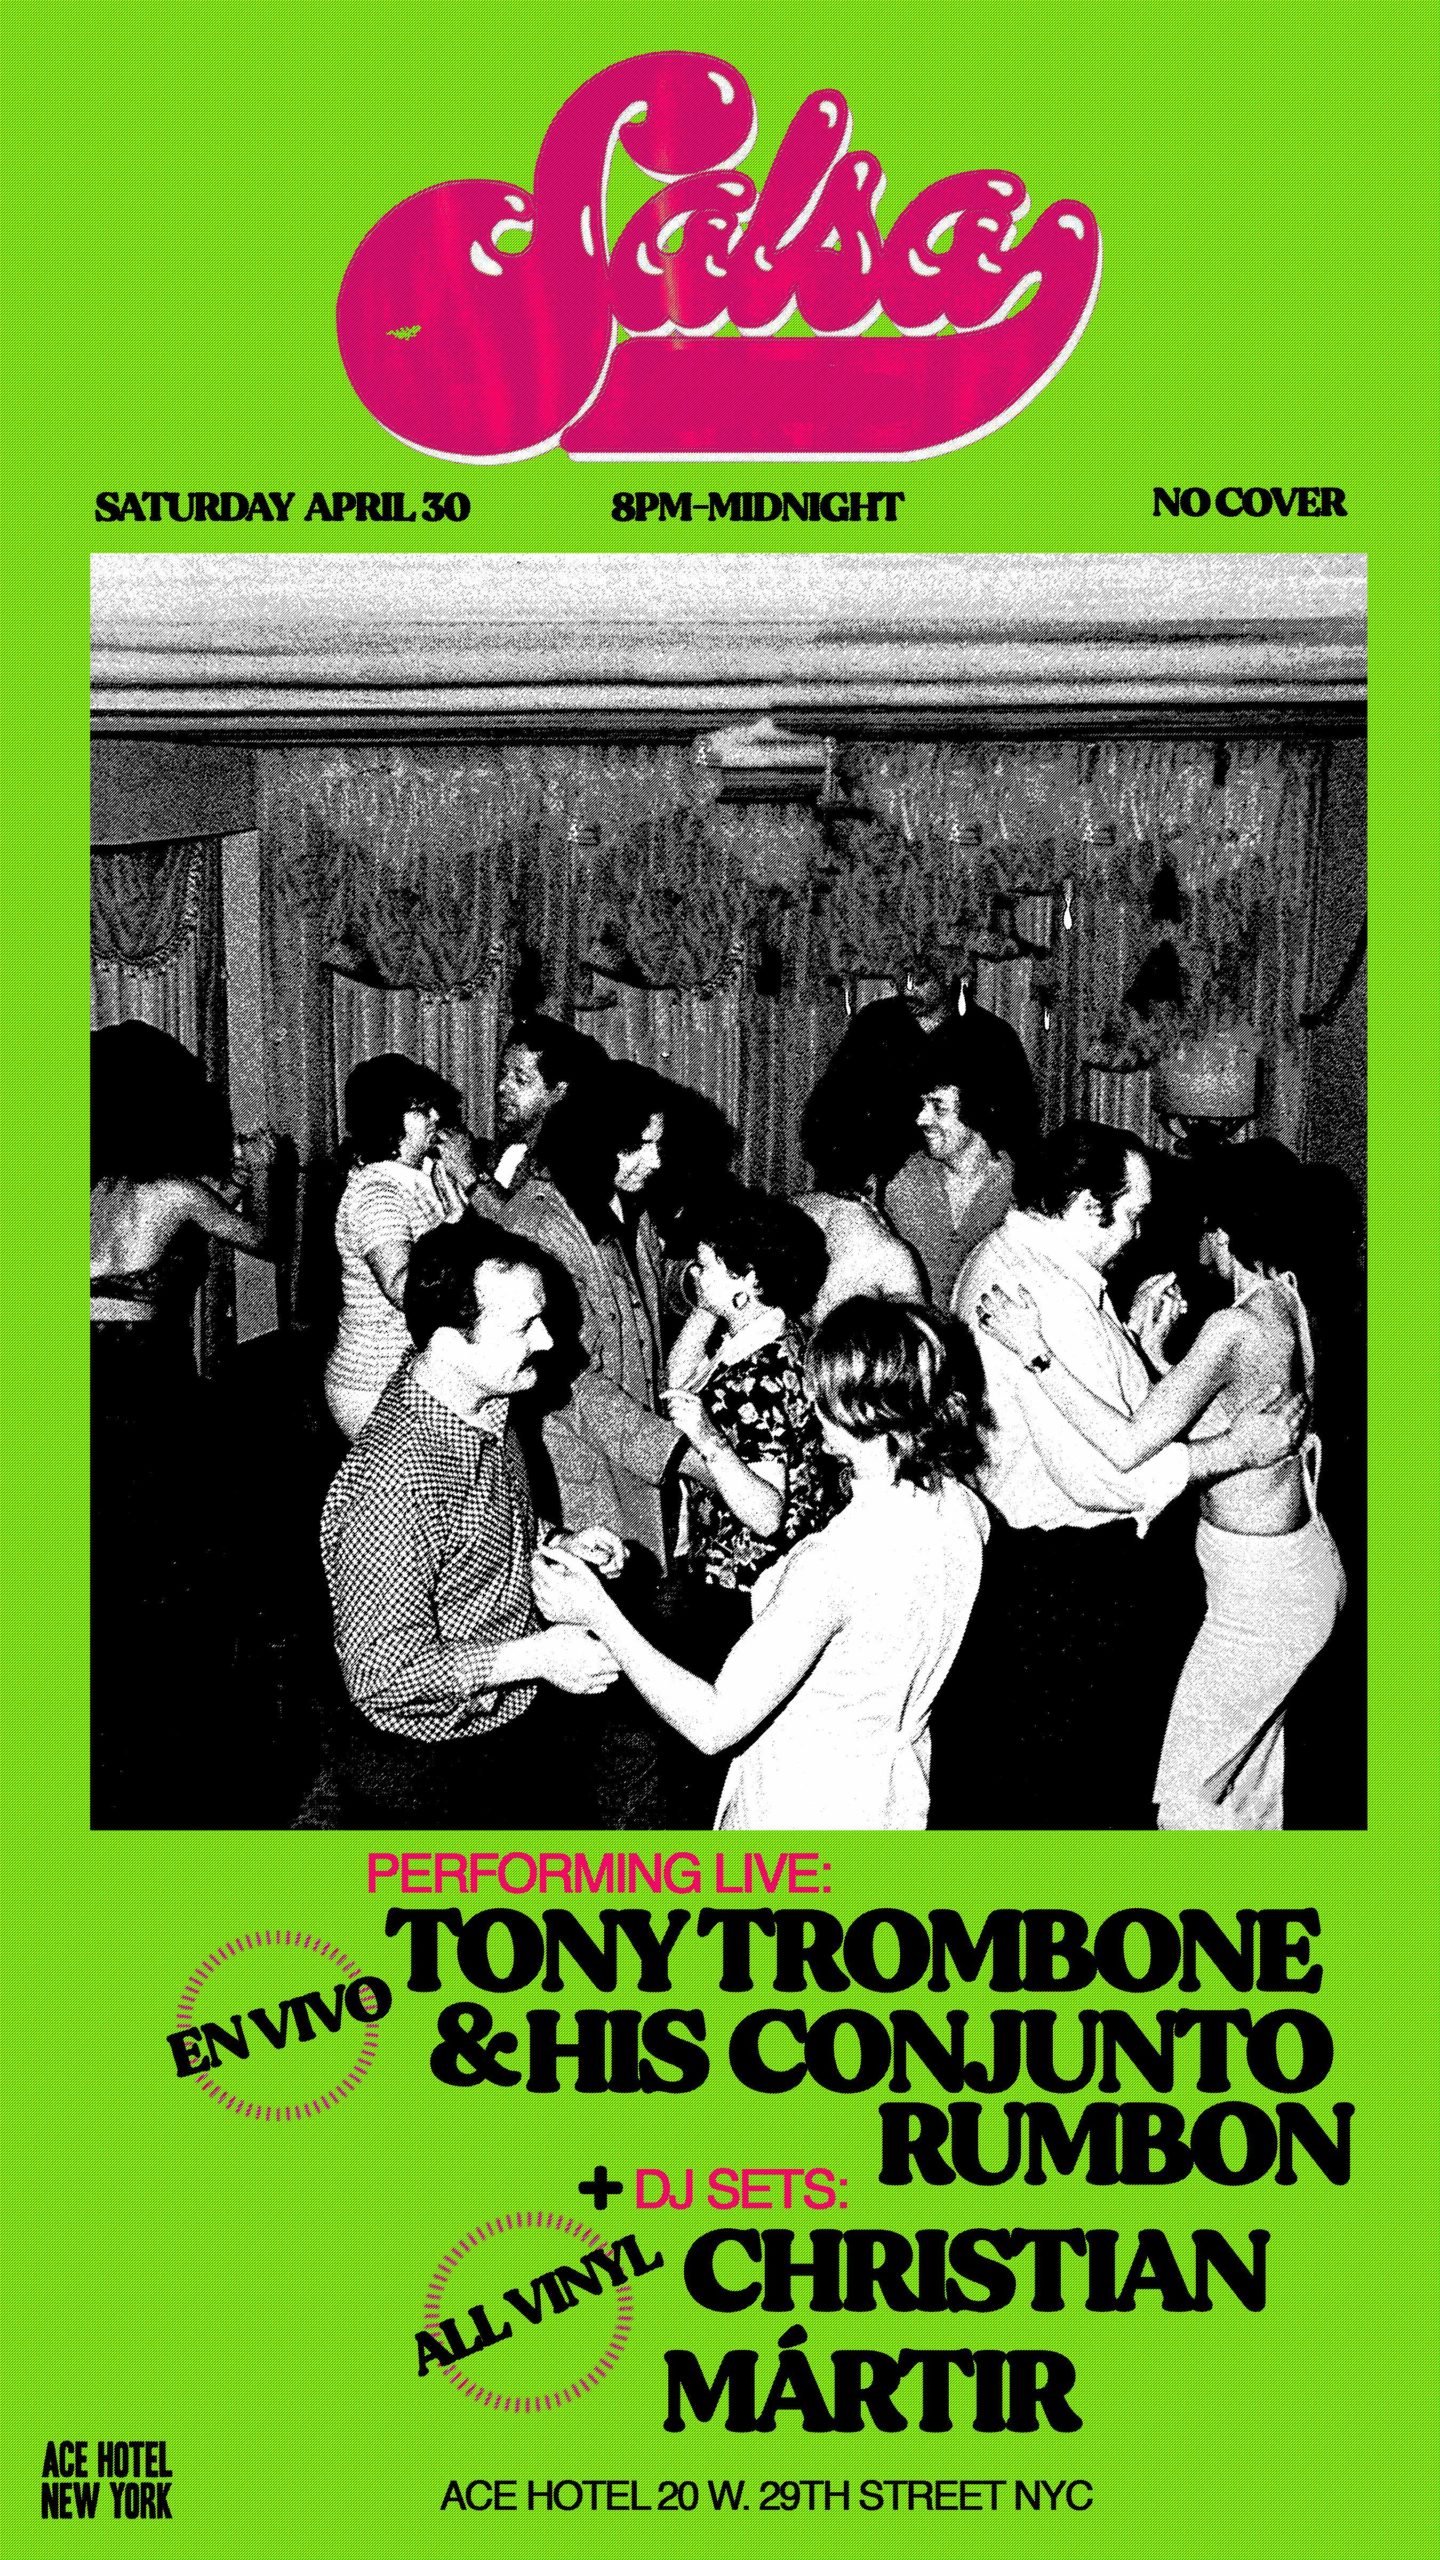 Sociedad Social Club Presents: Jose Trombone and His Conjunto Rumbon promo